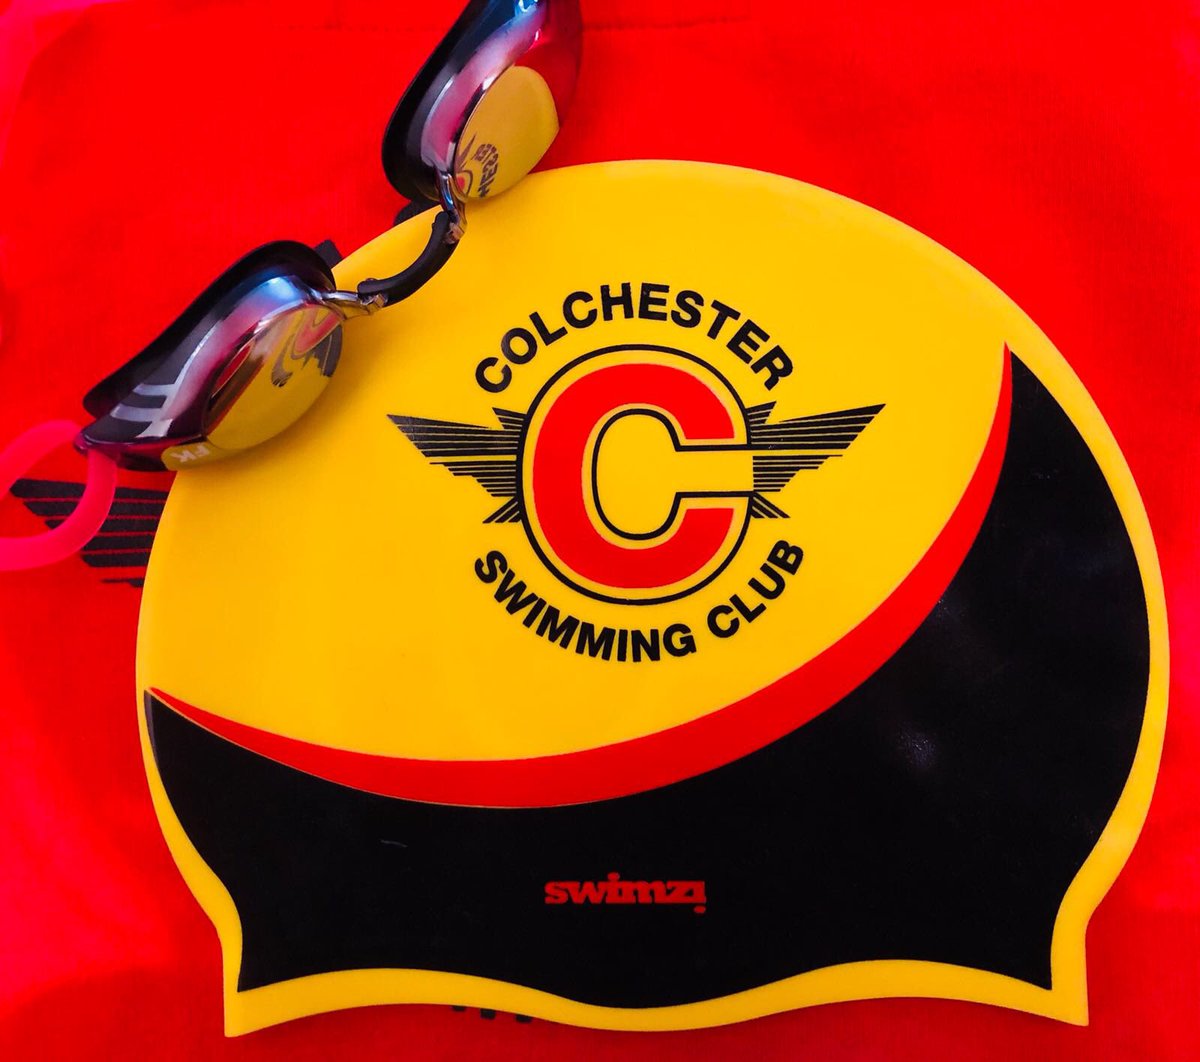 Colchester Swimming Club